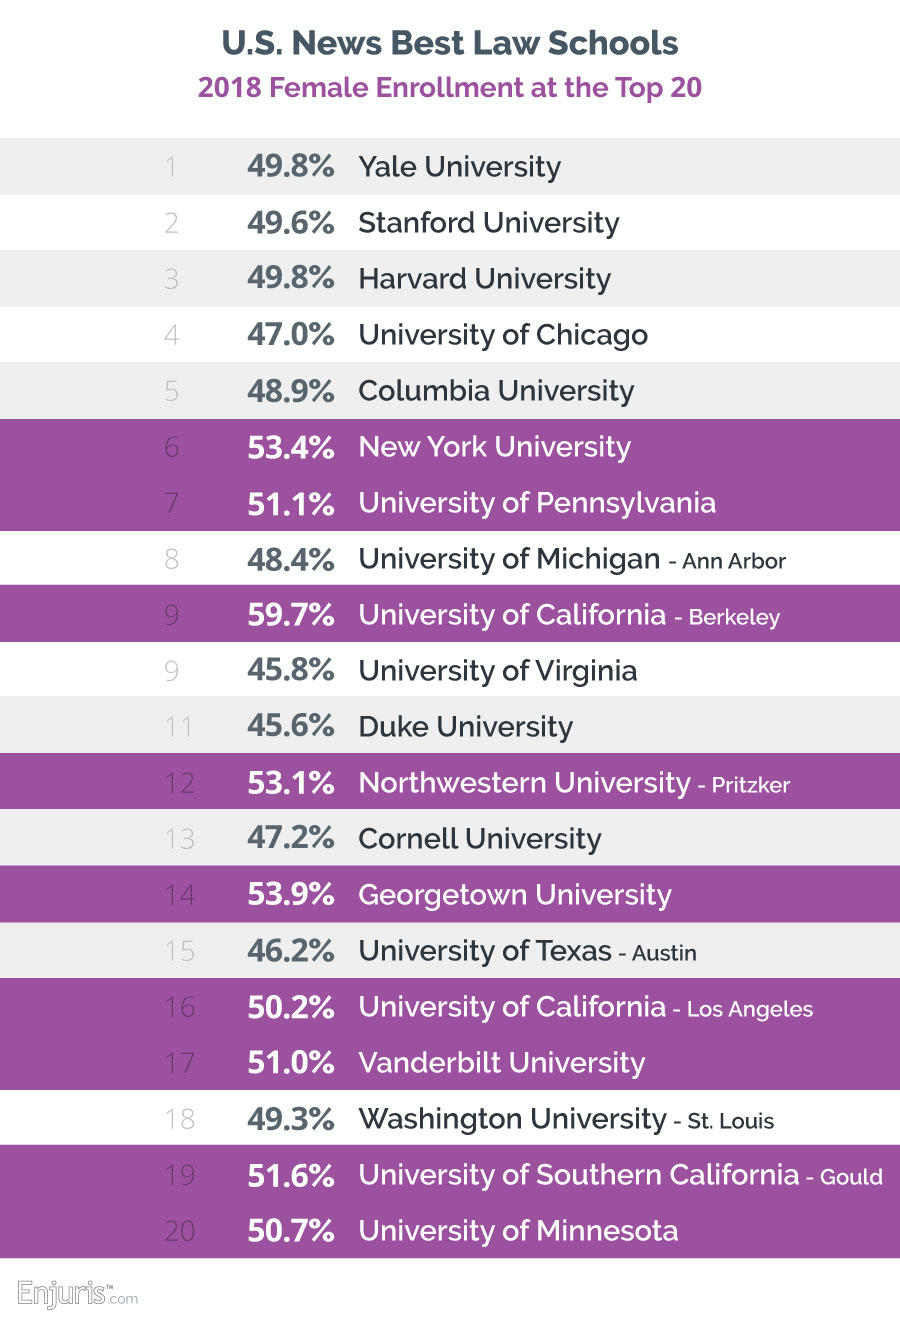 U.S. News Best Law Schools by female enrollment